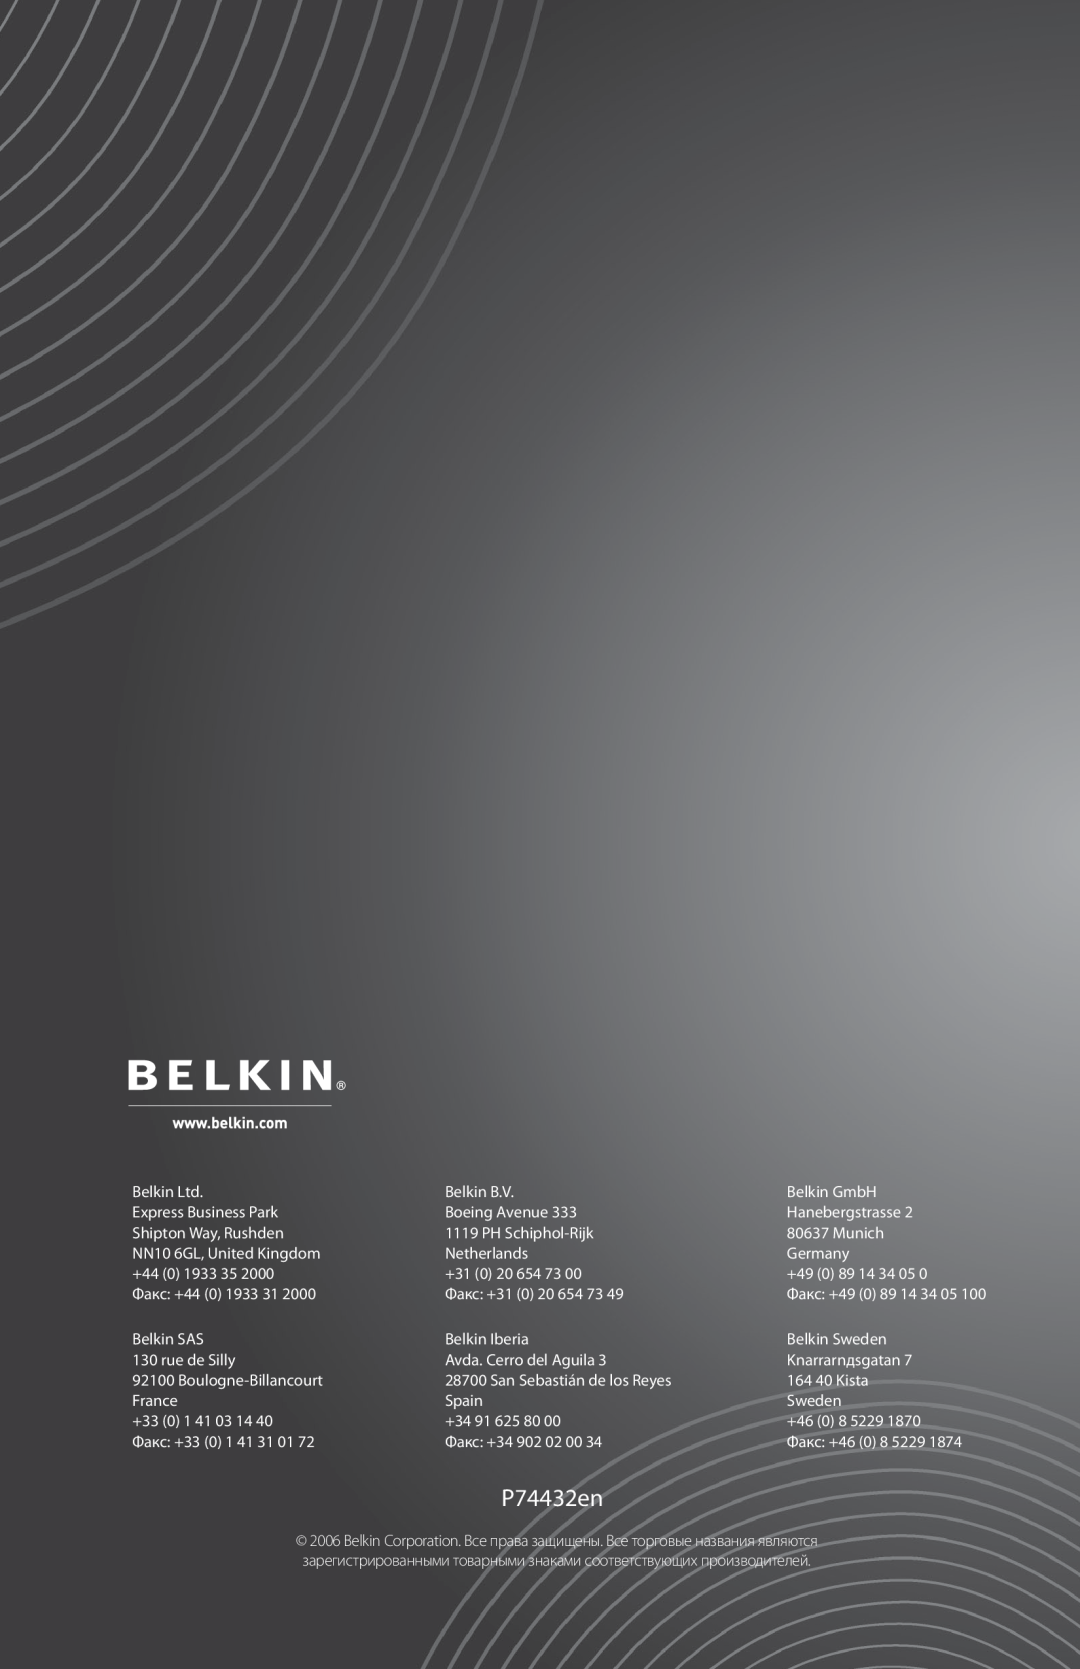 Belkin F9G623EN3M, F9G823EN3M user manual Аудио Видео Цифровое Комплекты, Введение, P74432en, Факс +49 0 89 14 34 